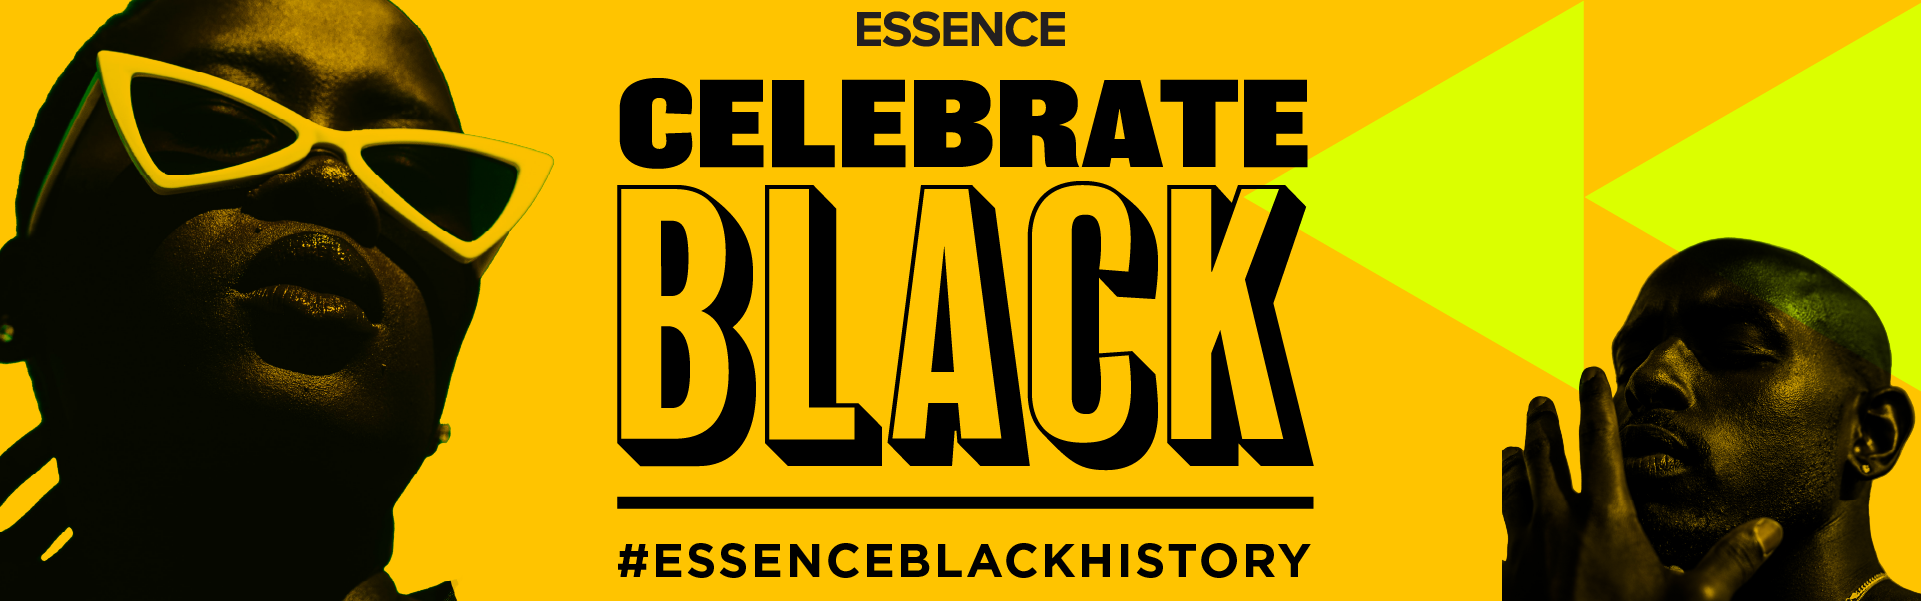 ESSENCE Black History Month Programming